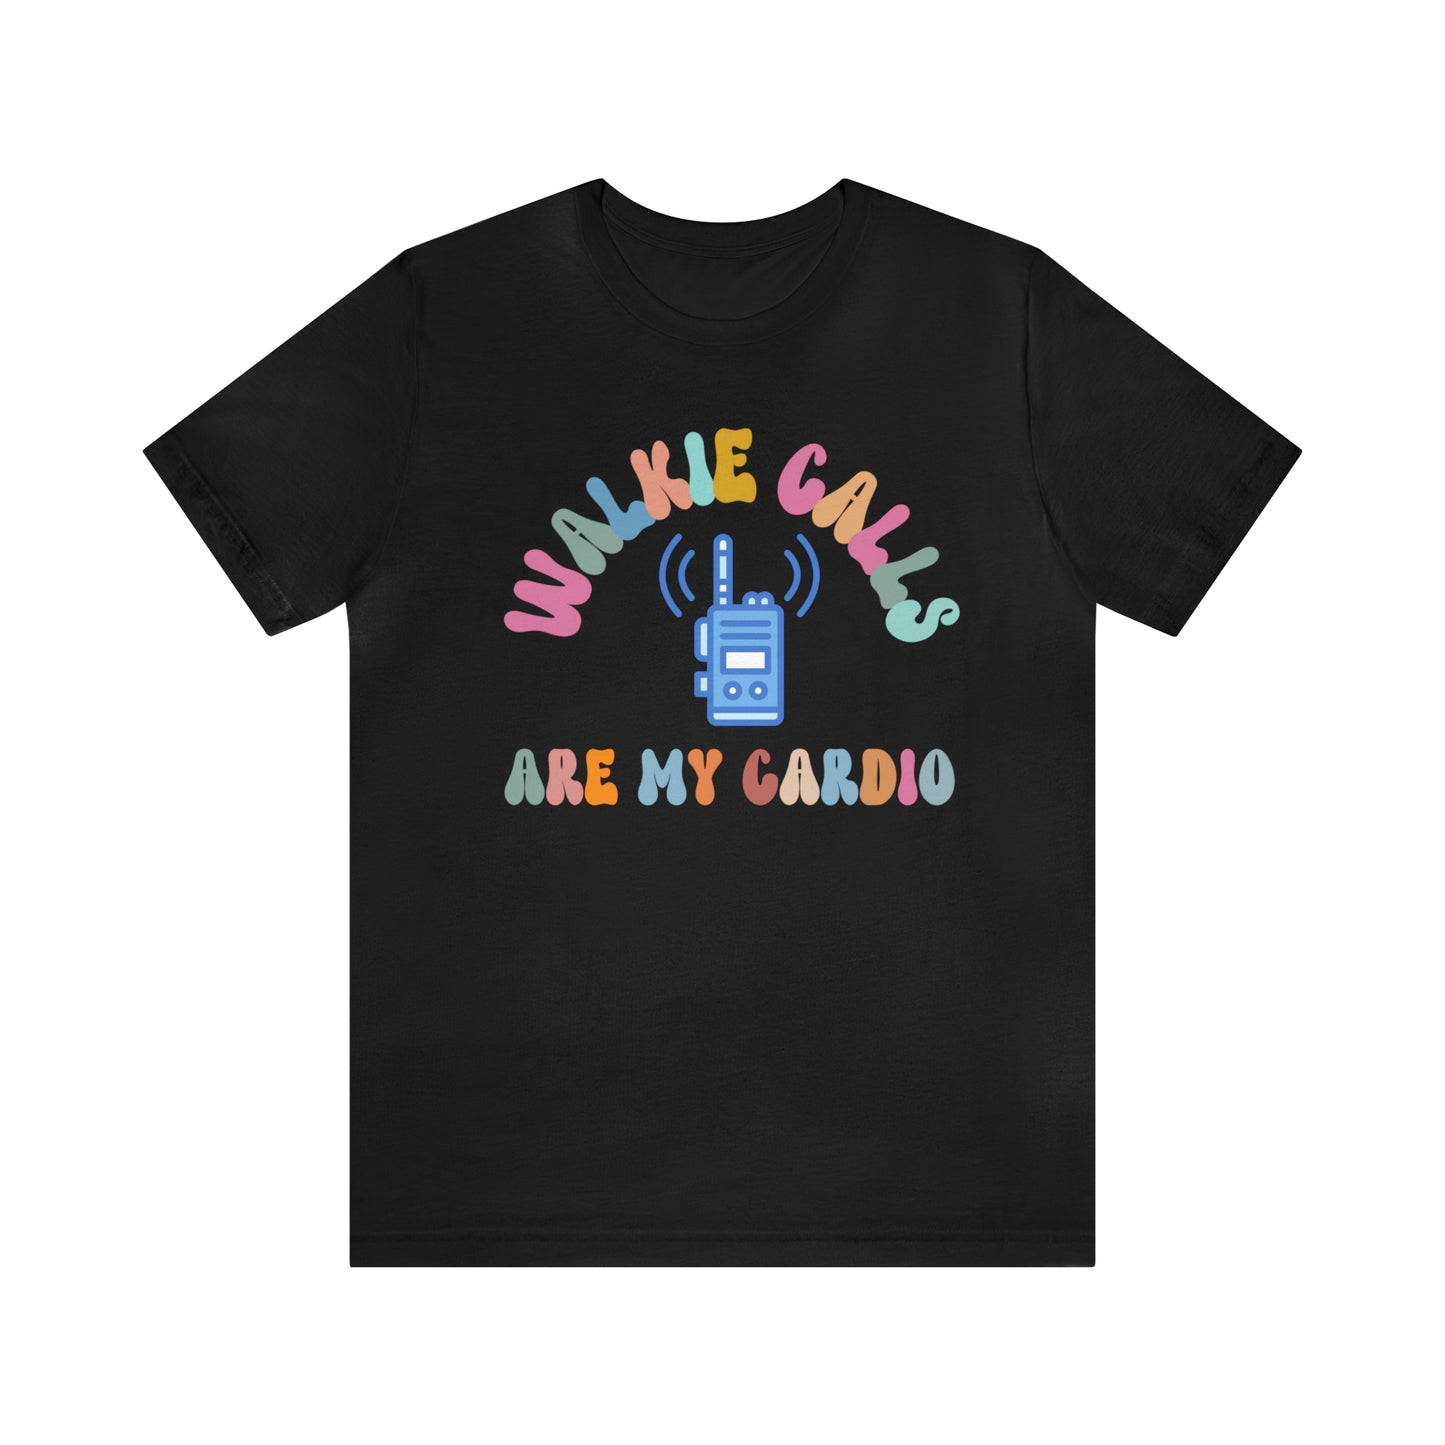 Walkie Calls Are My Cardio Shirt, Special Education Teacher Shirt, School Psychologist Shirt, T243